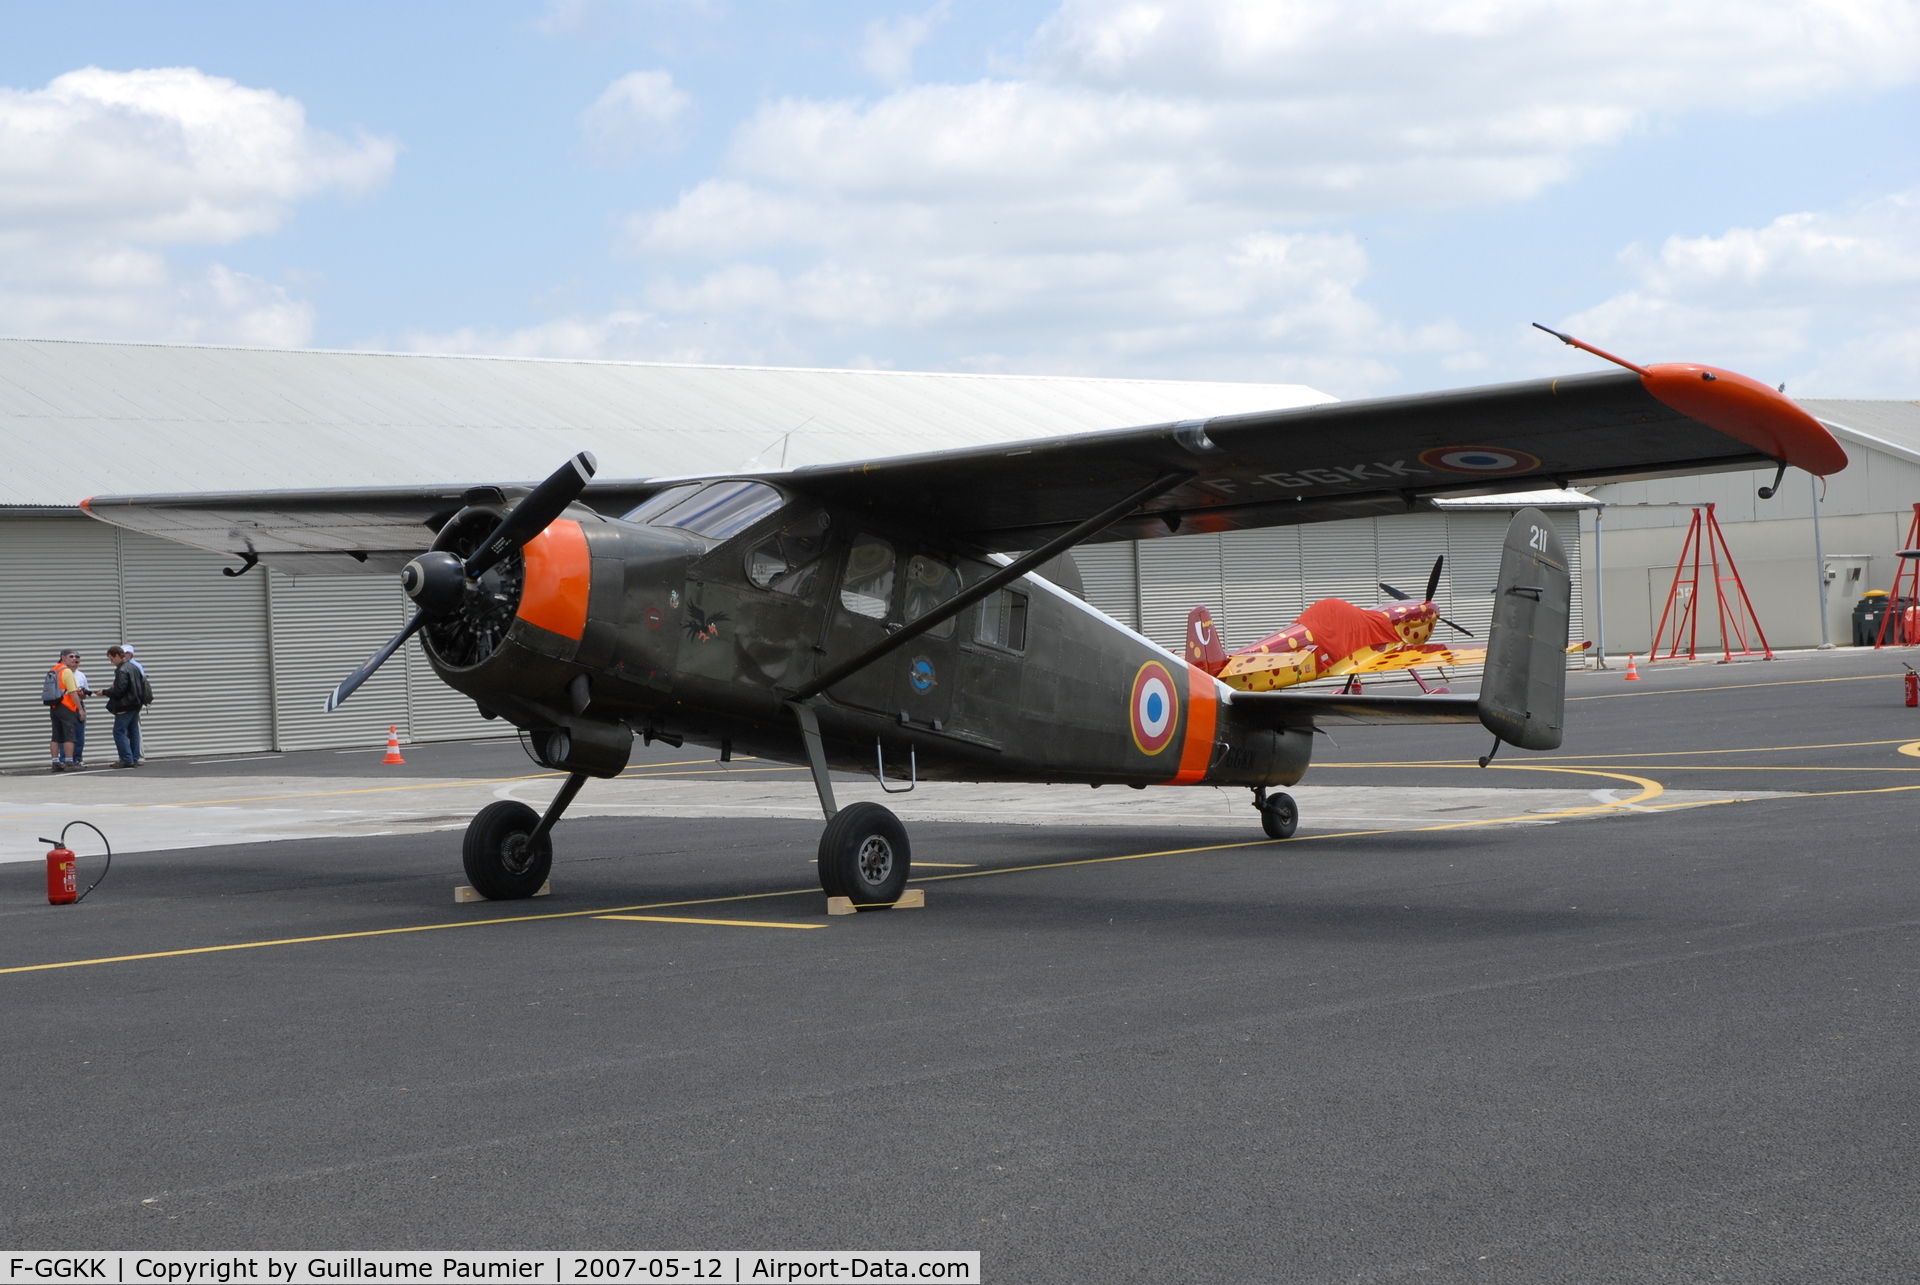 F-GGKK, Max Holste MH-1521C-1 Broussard C/N 211M, Photo on Wikipedia